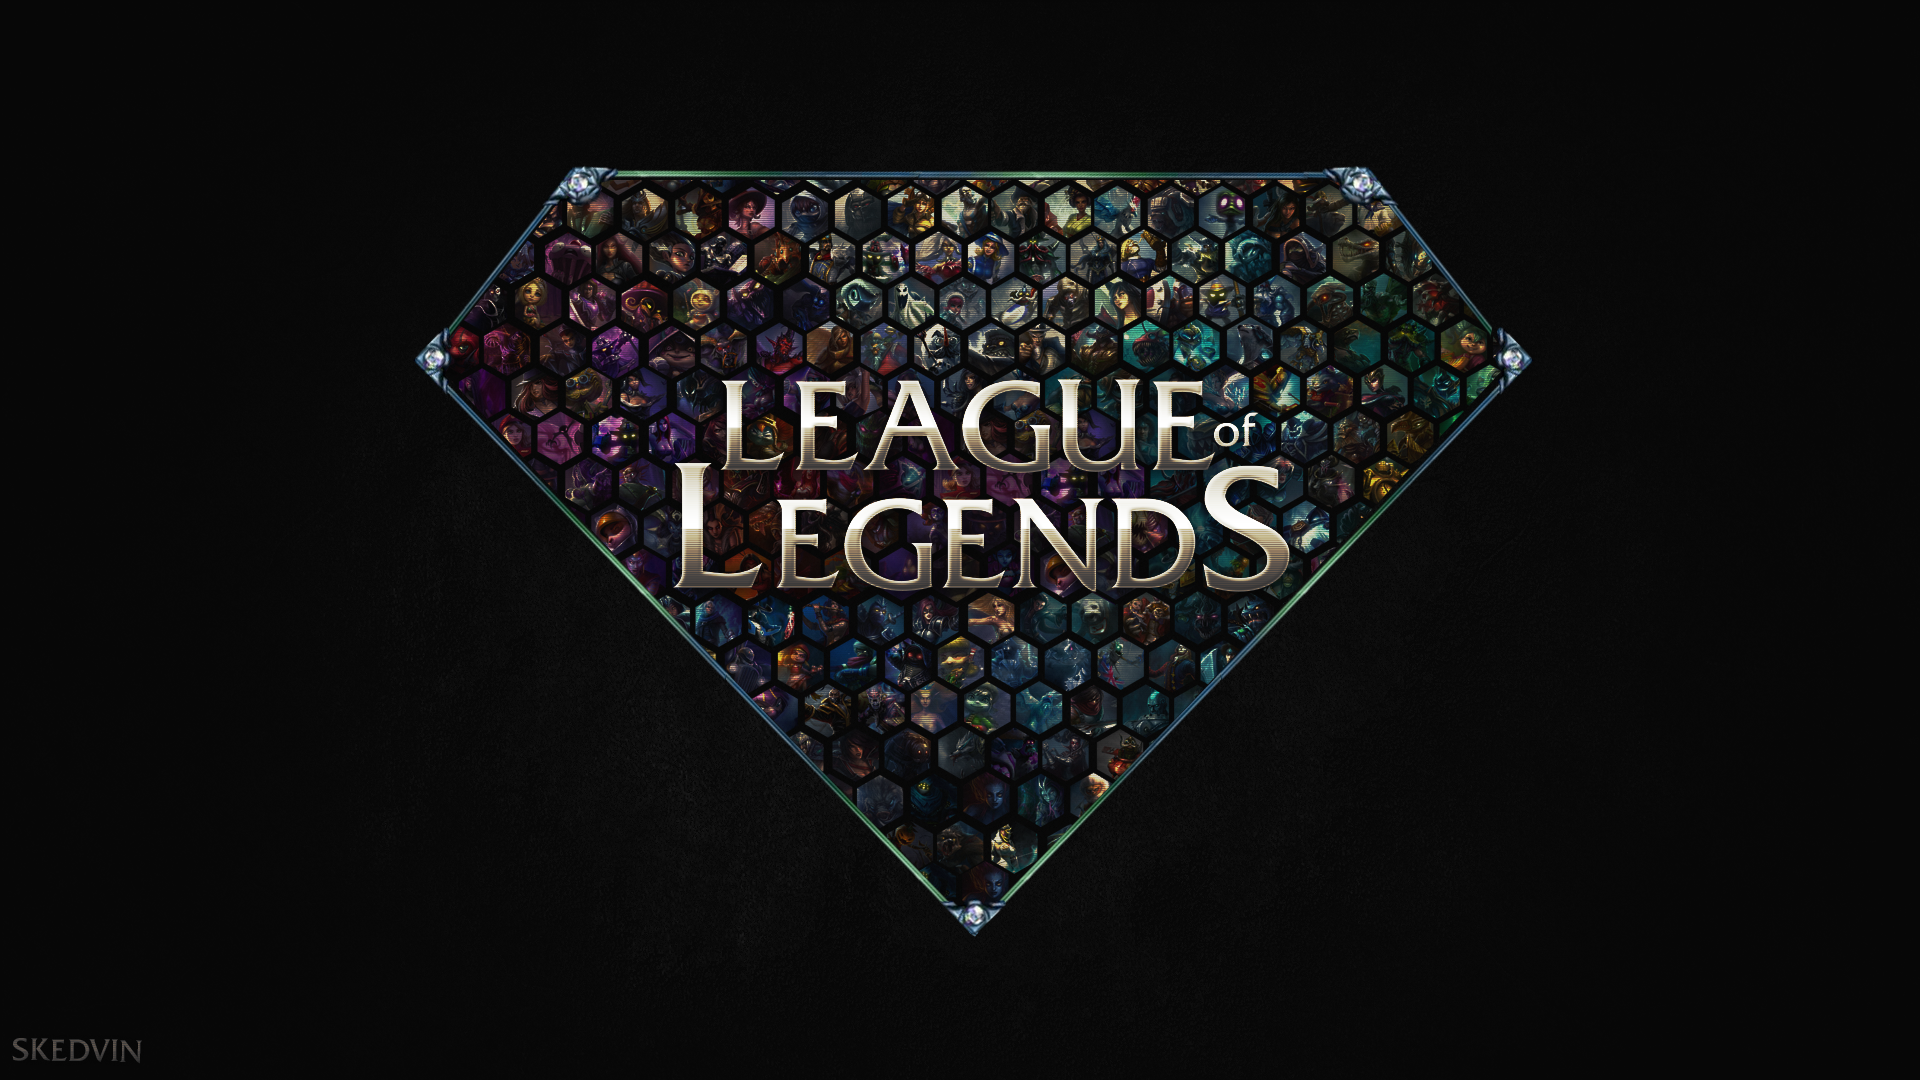 League of Legends wallpaper [19201080p] HD by SKEDVIN on